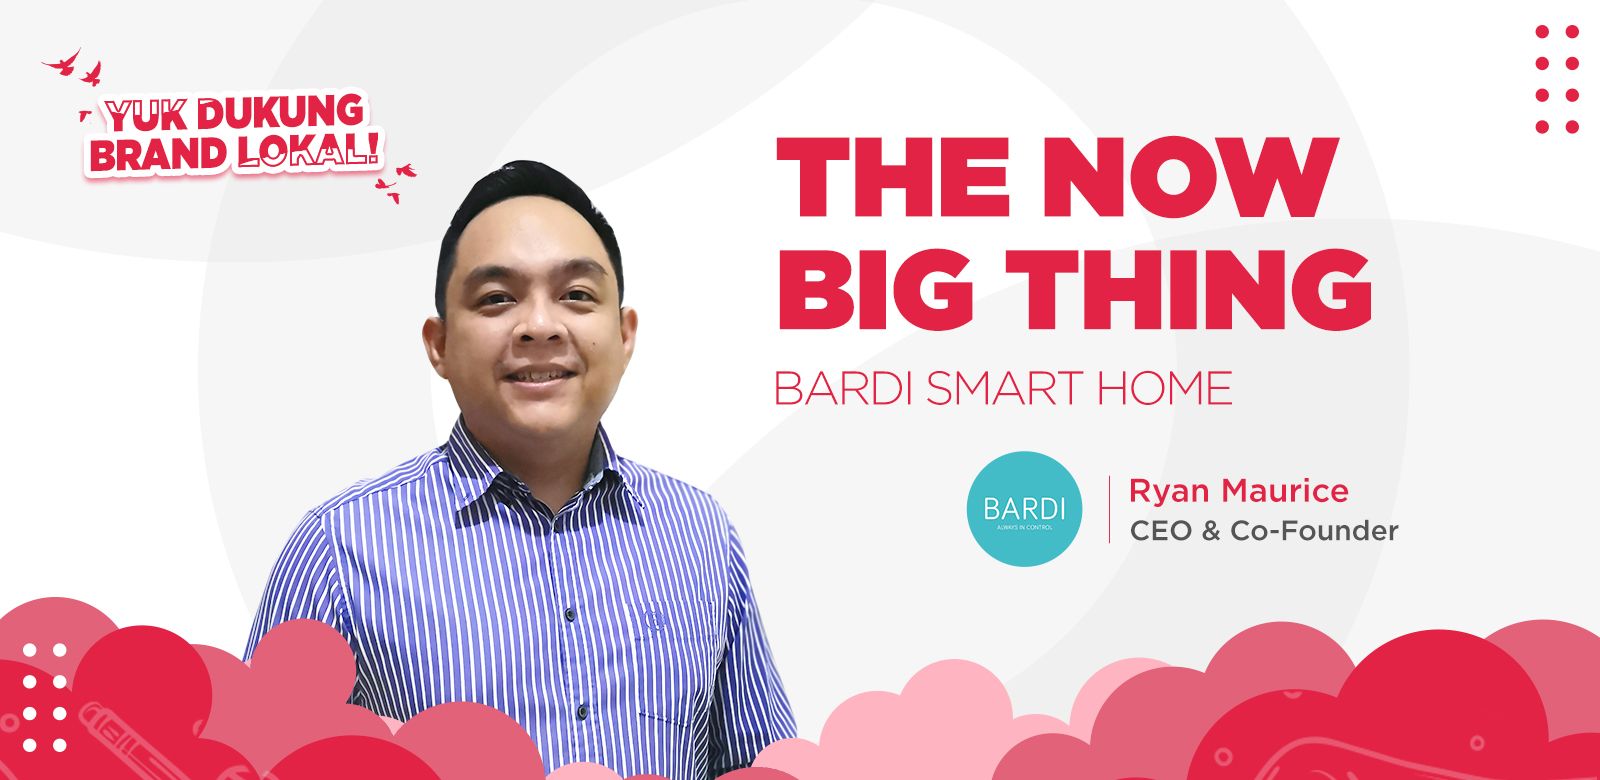 Wawancara Khusus dengan CEO BARDI Smarthome: Brand Lokal IoT Fenomenal.